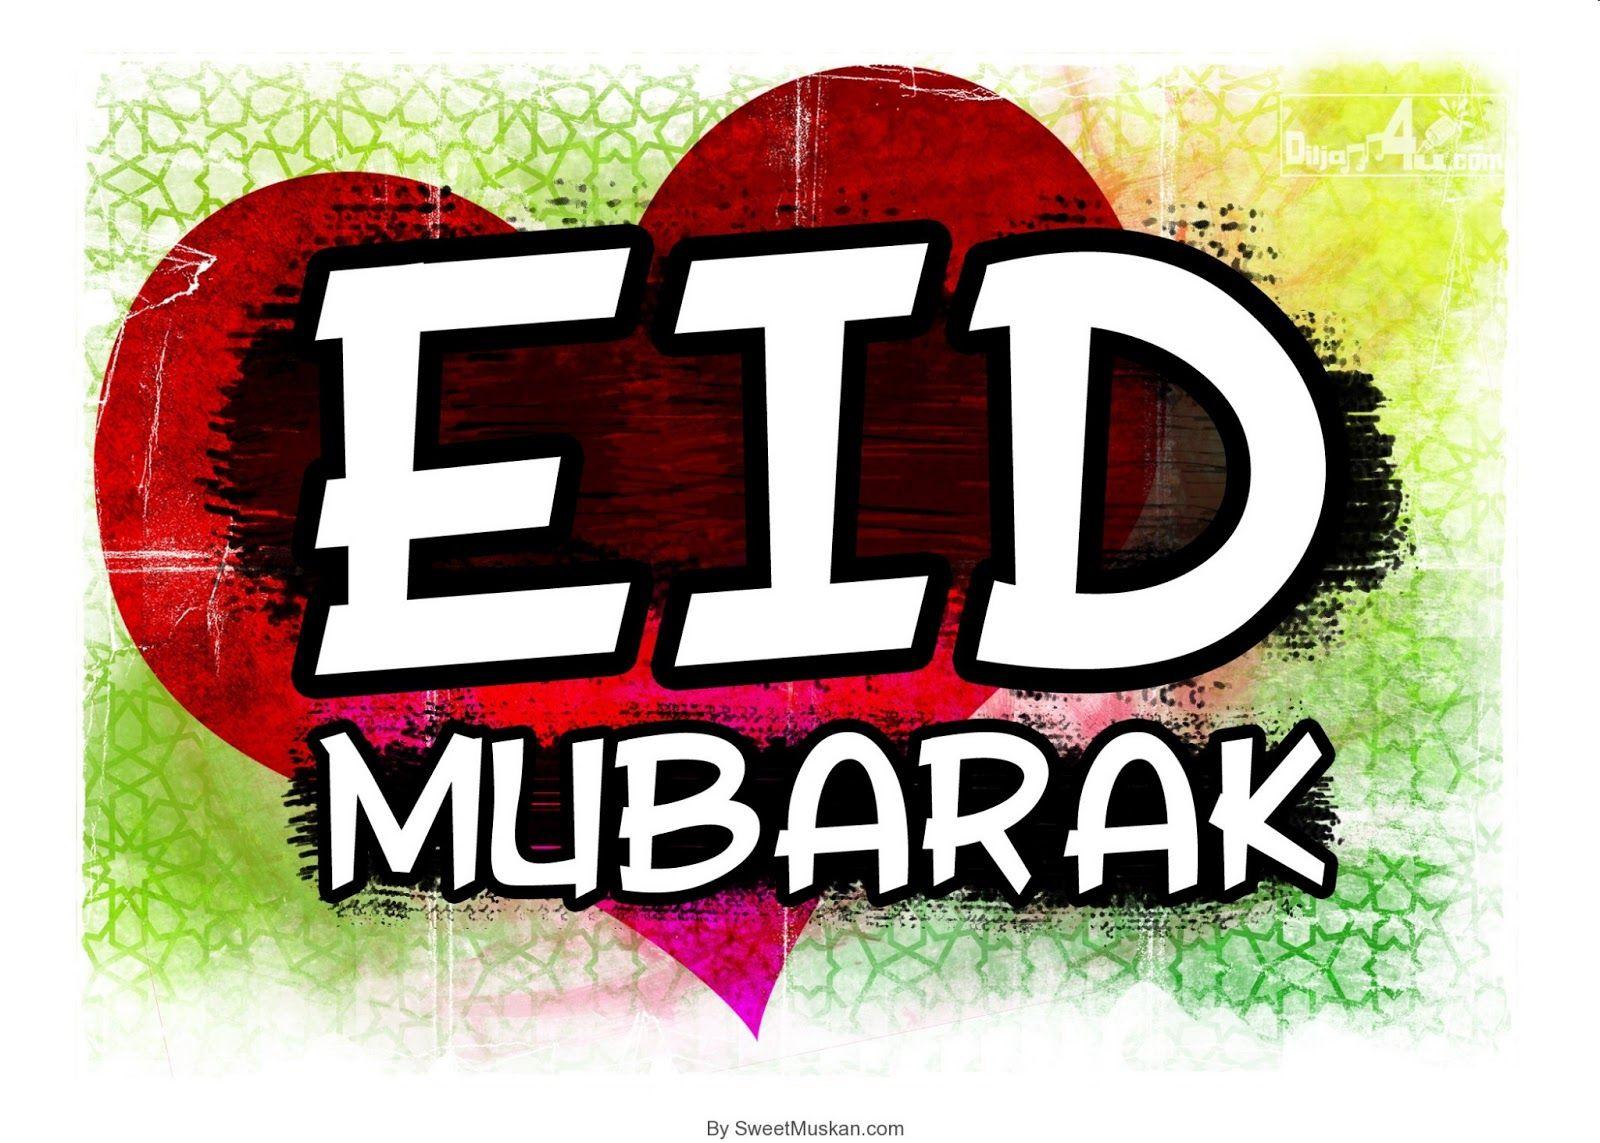 Eid mubarak HD image ideas only. Eid